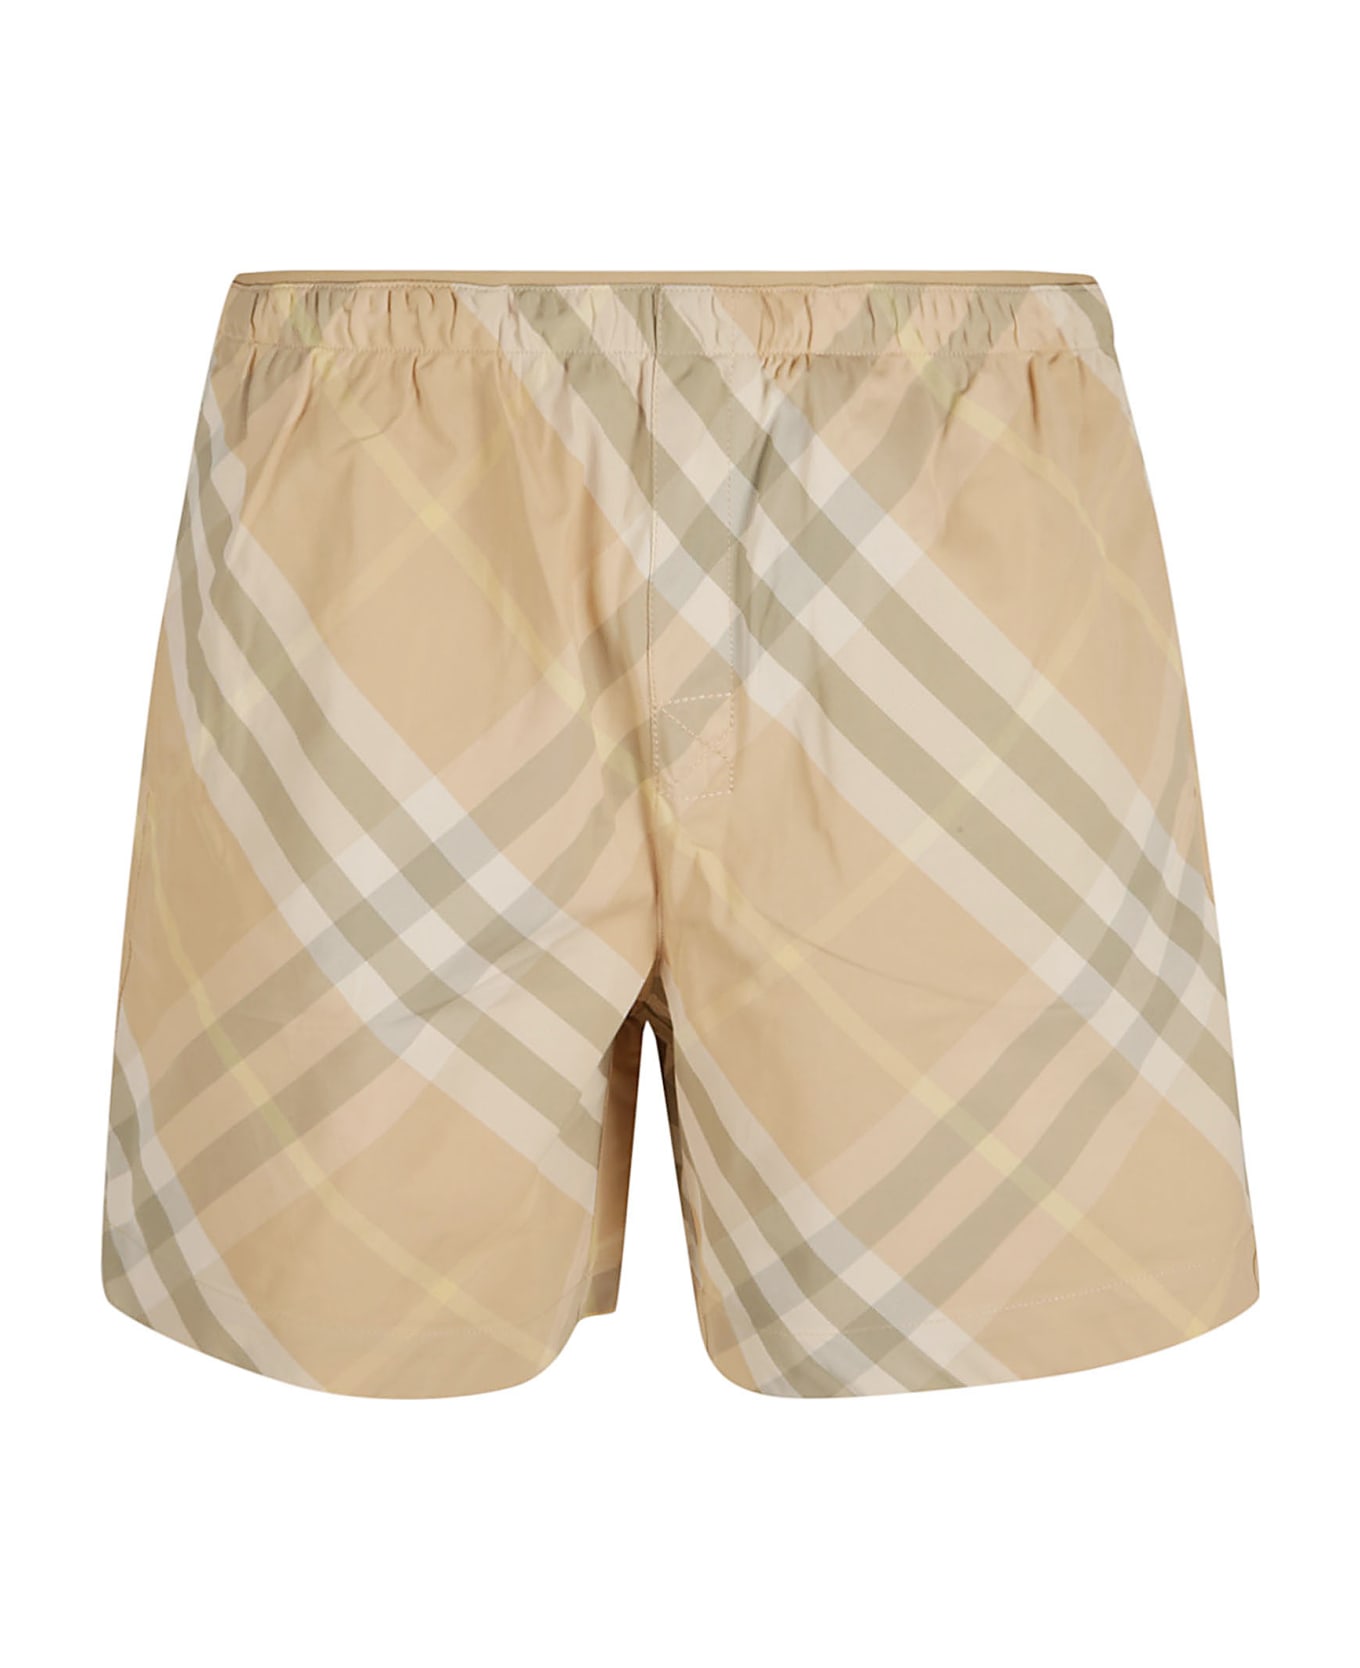 Burberry Elastic Waist Check Shorts - Flax IP Check